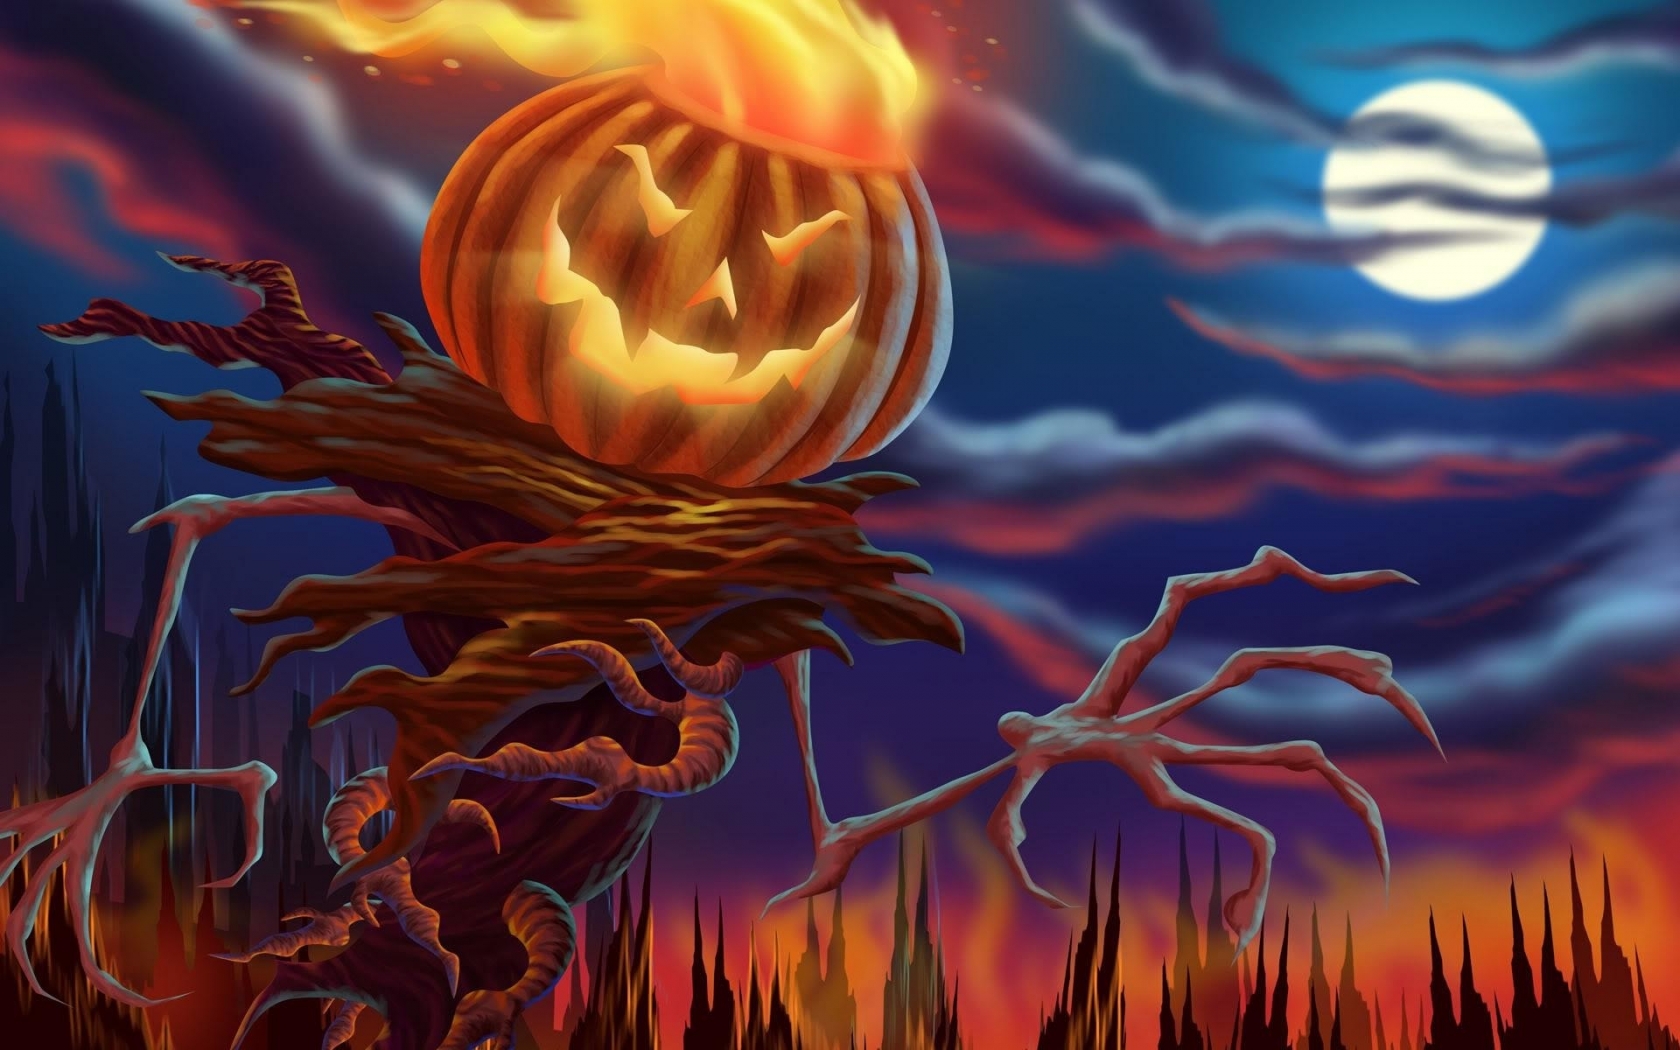 Halloween Digital Illustration for 1680 x 1050 widescreen resolution